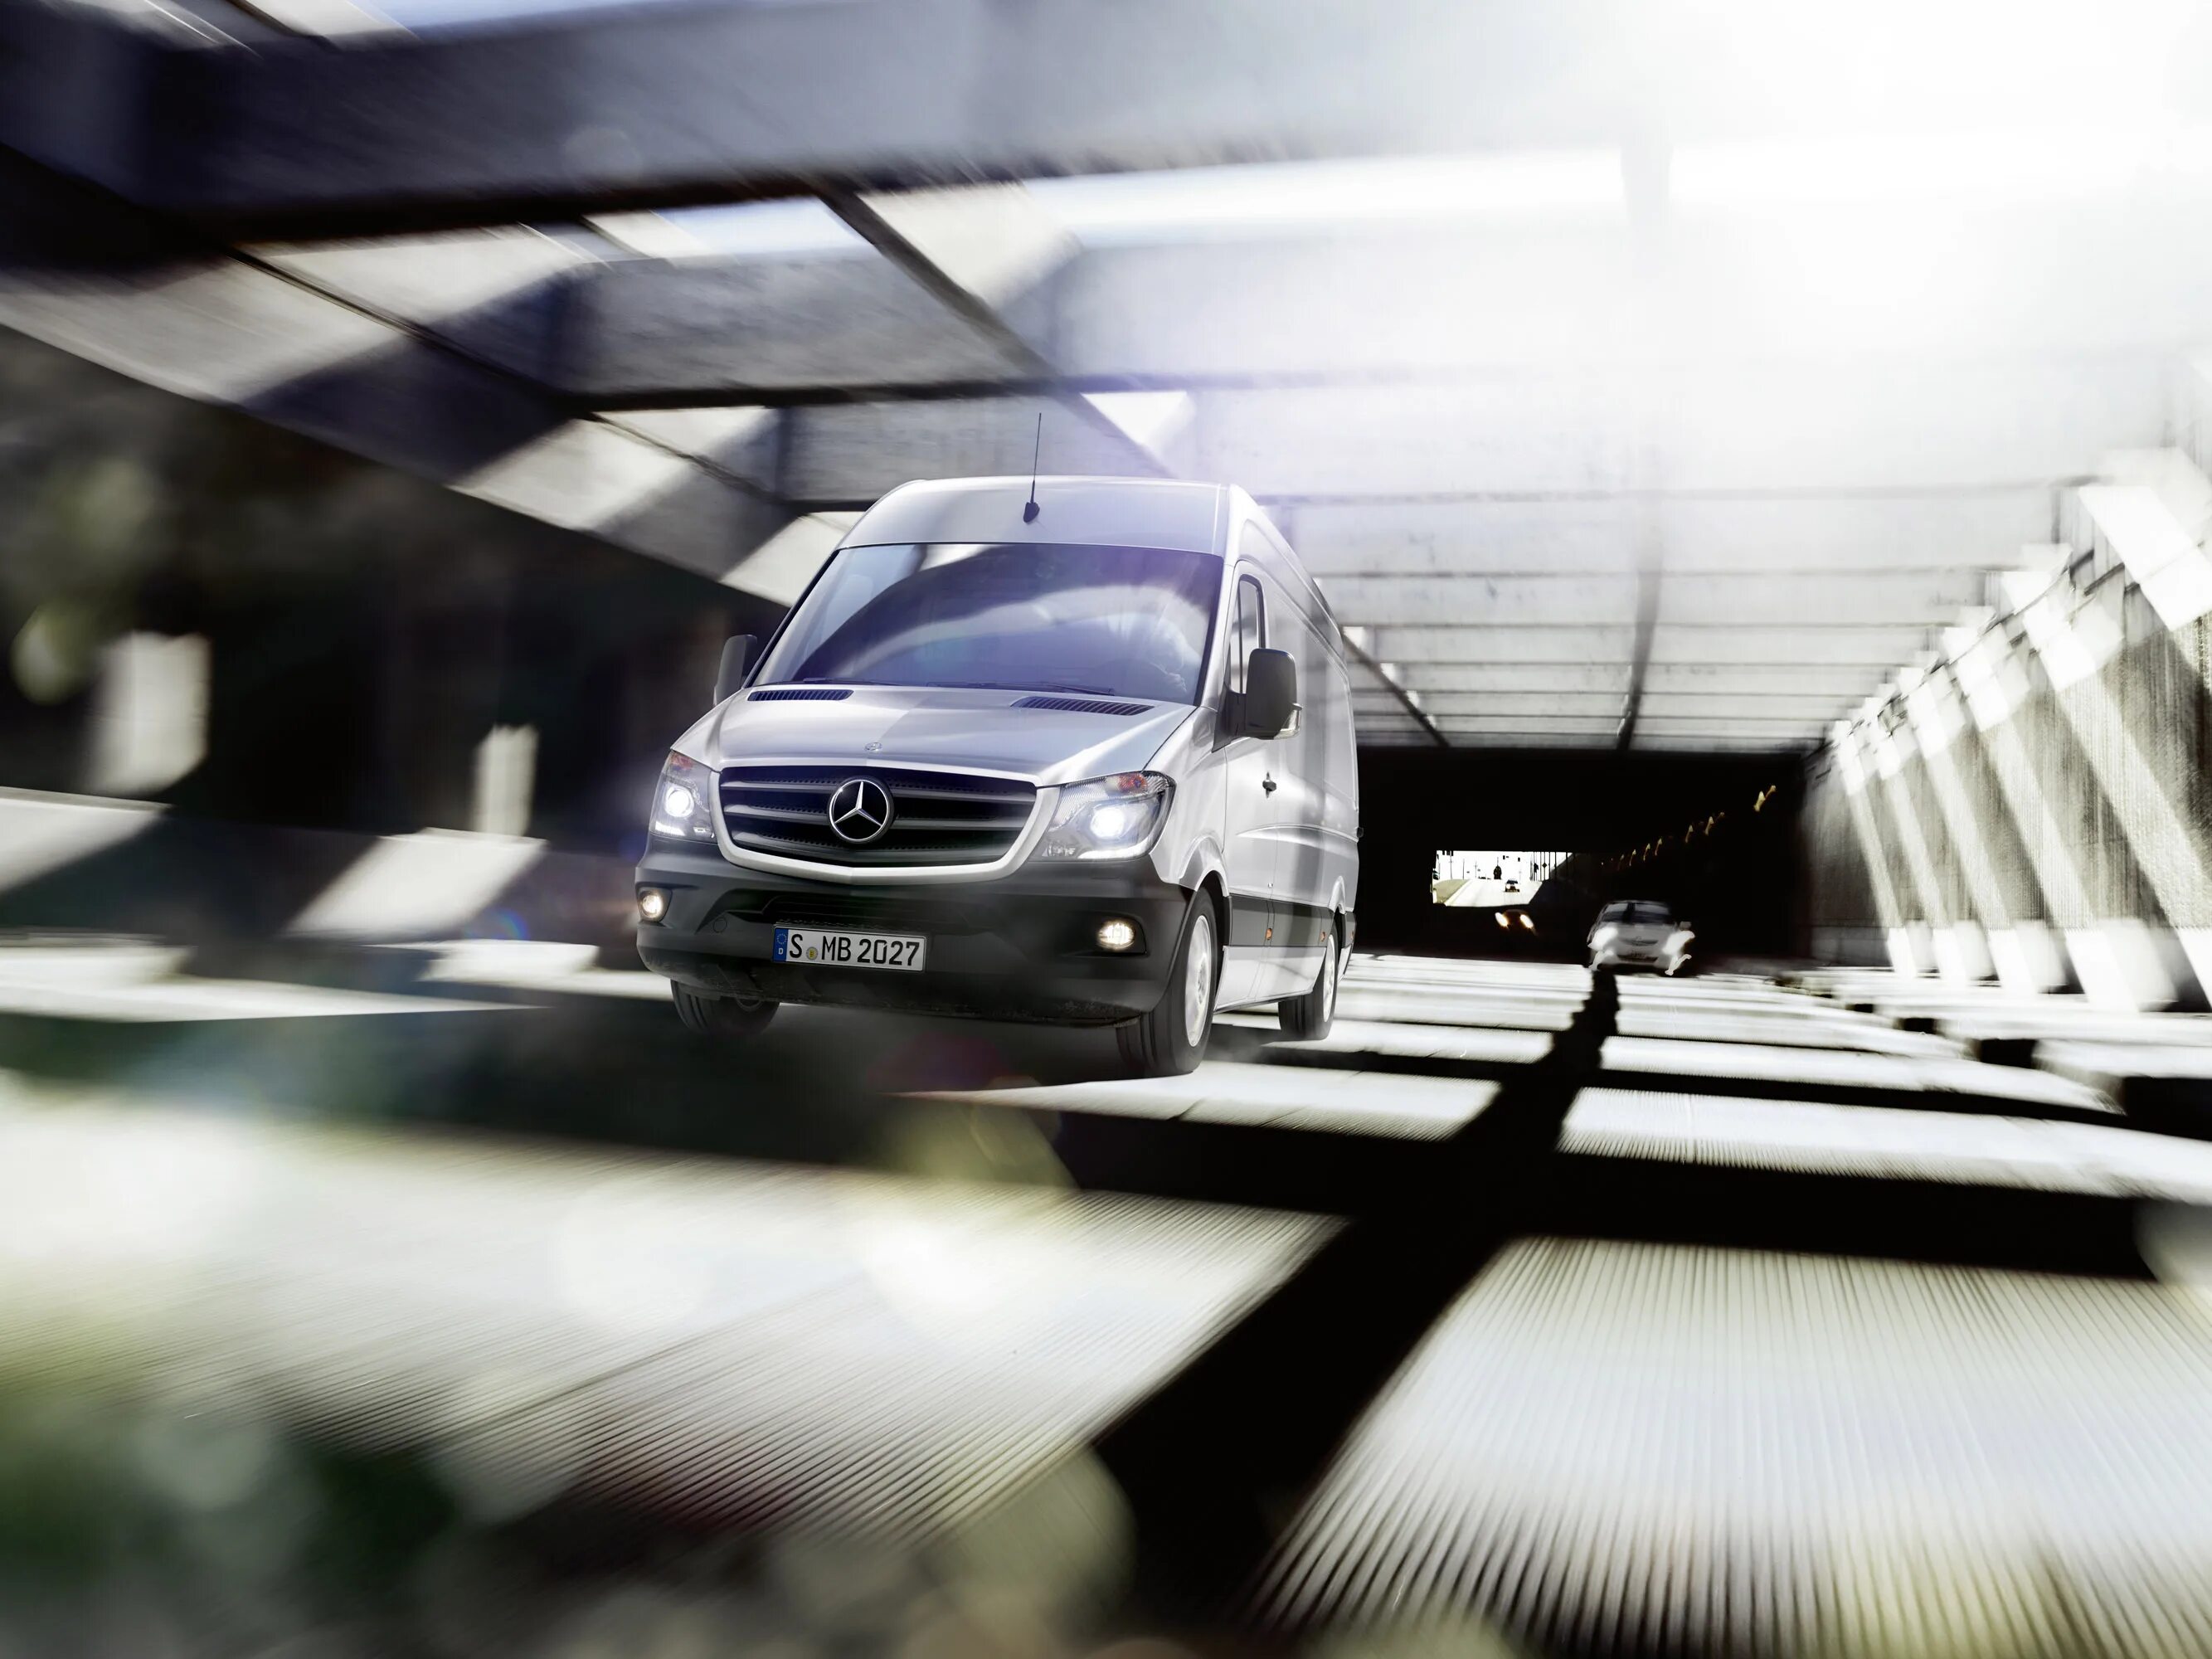 Mercedes-Benz Sprinter 2014. Мерседес Спринтер грузовой 2014. 2025 Mercedes Sprinter. Mercedes Benz Sprinter 2023. Включи спринтер